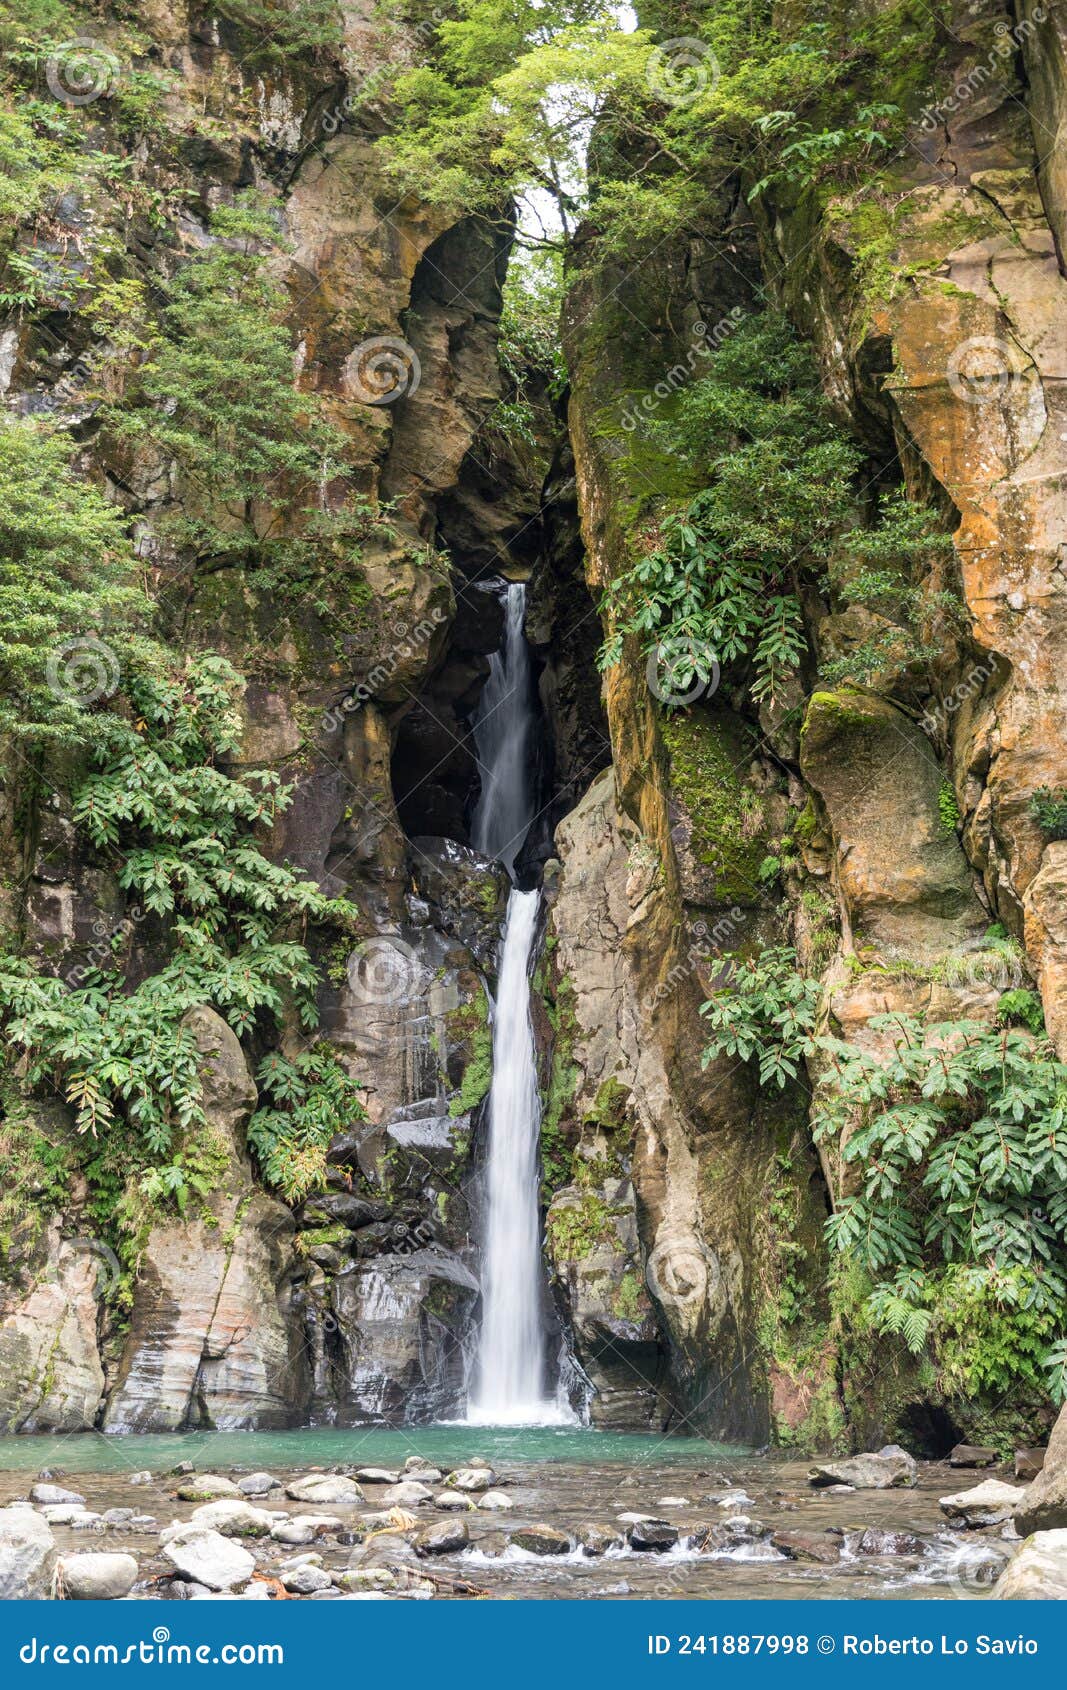 the waterfall salto do cabrito in the sao miguel island azores, portugal